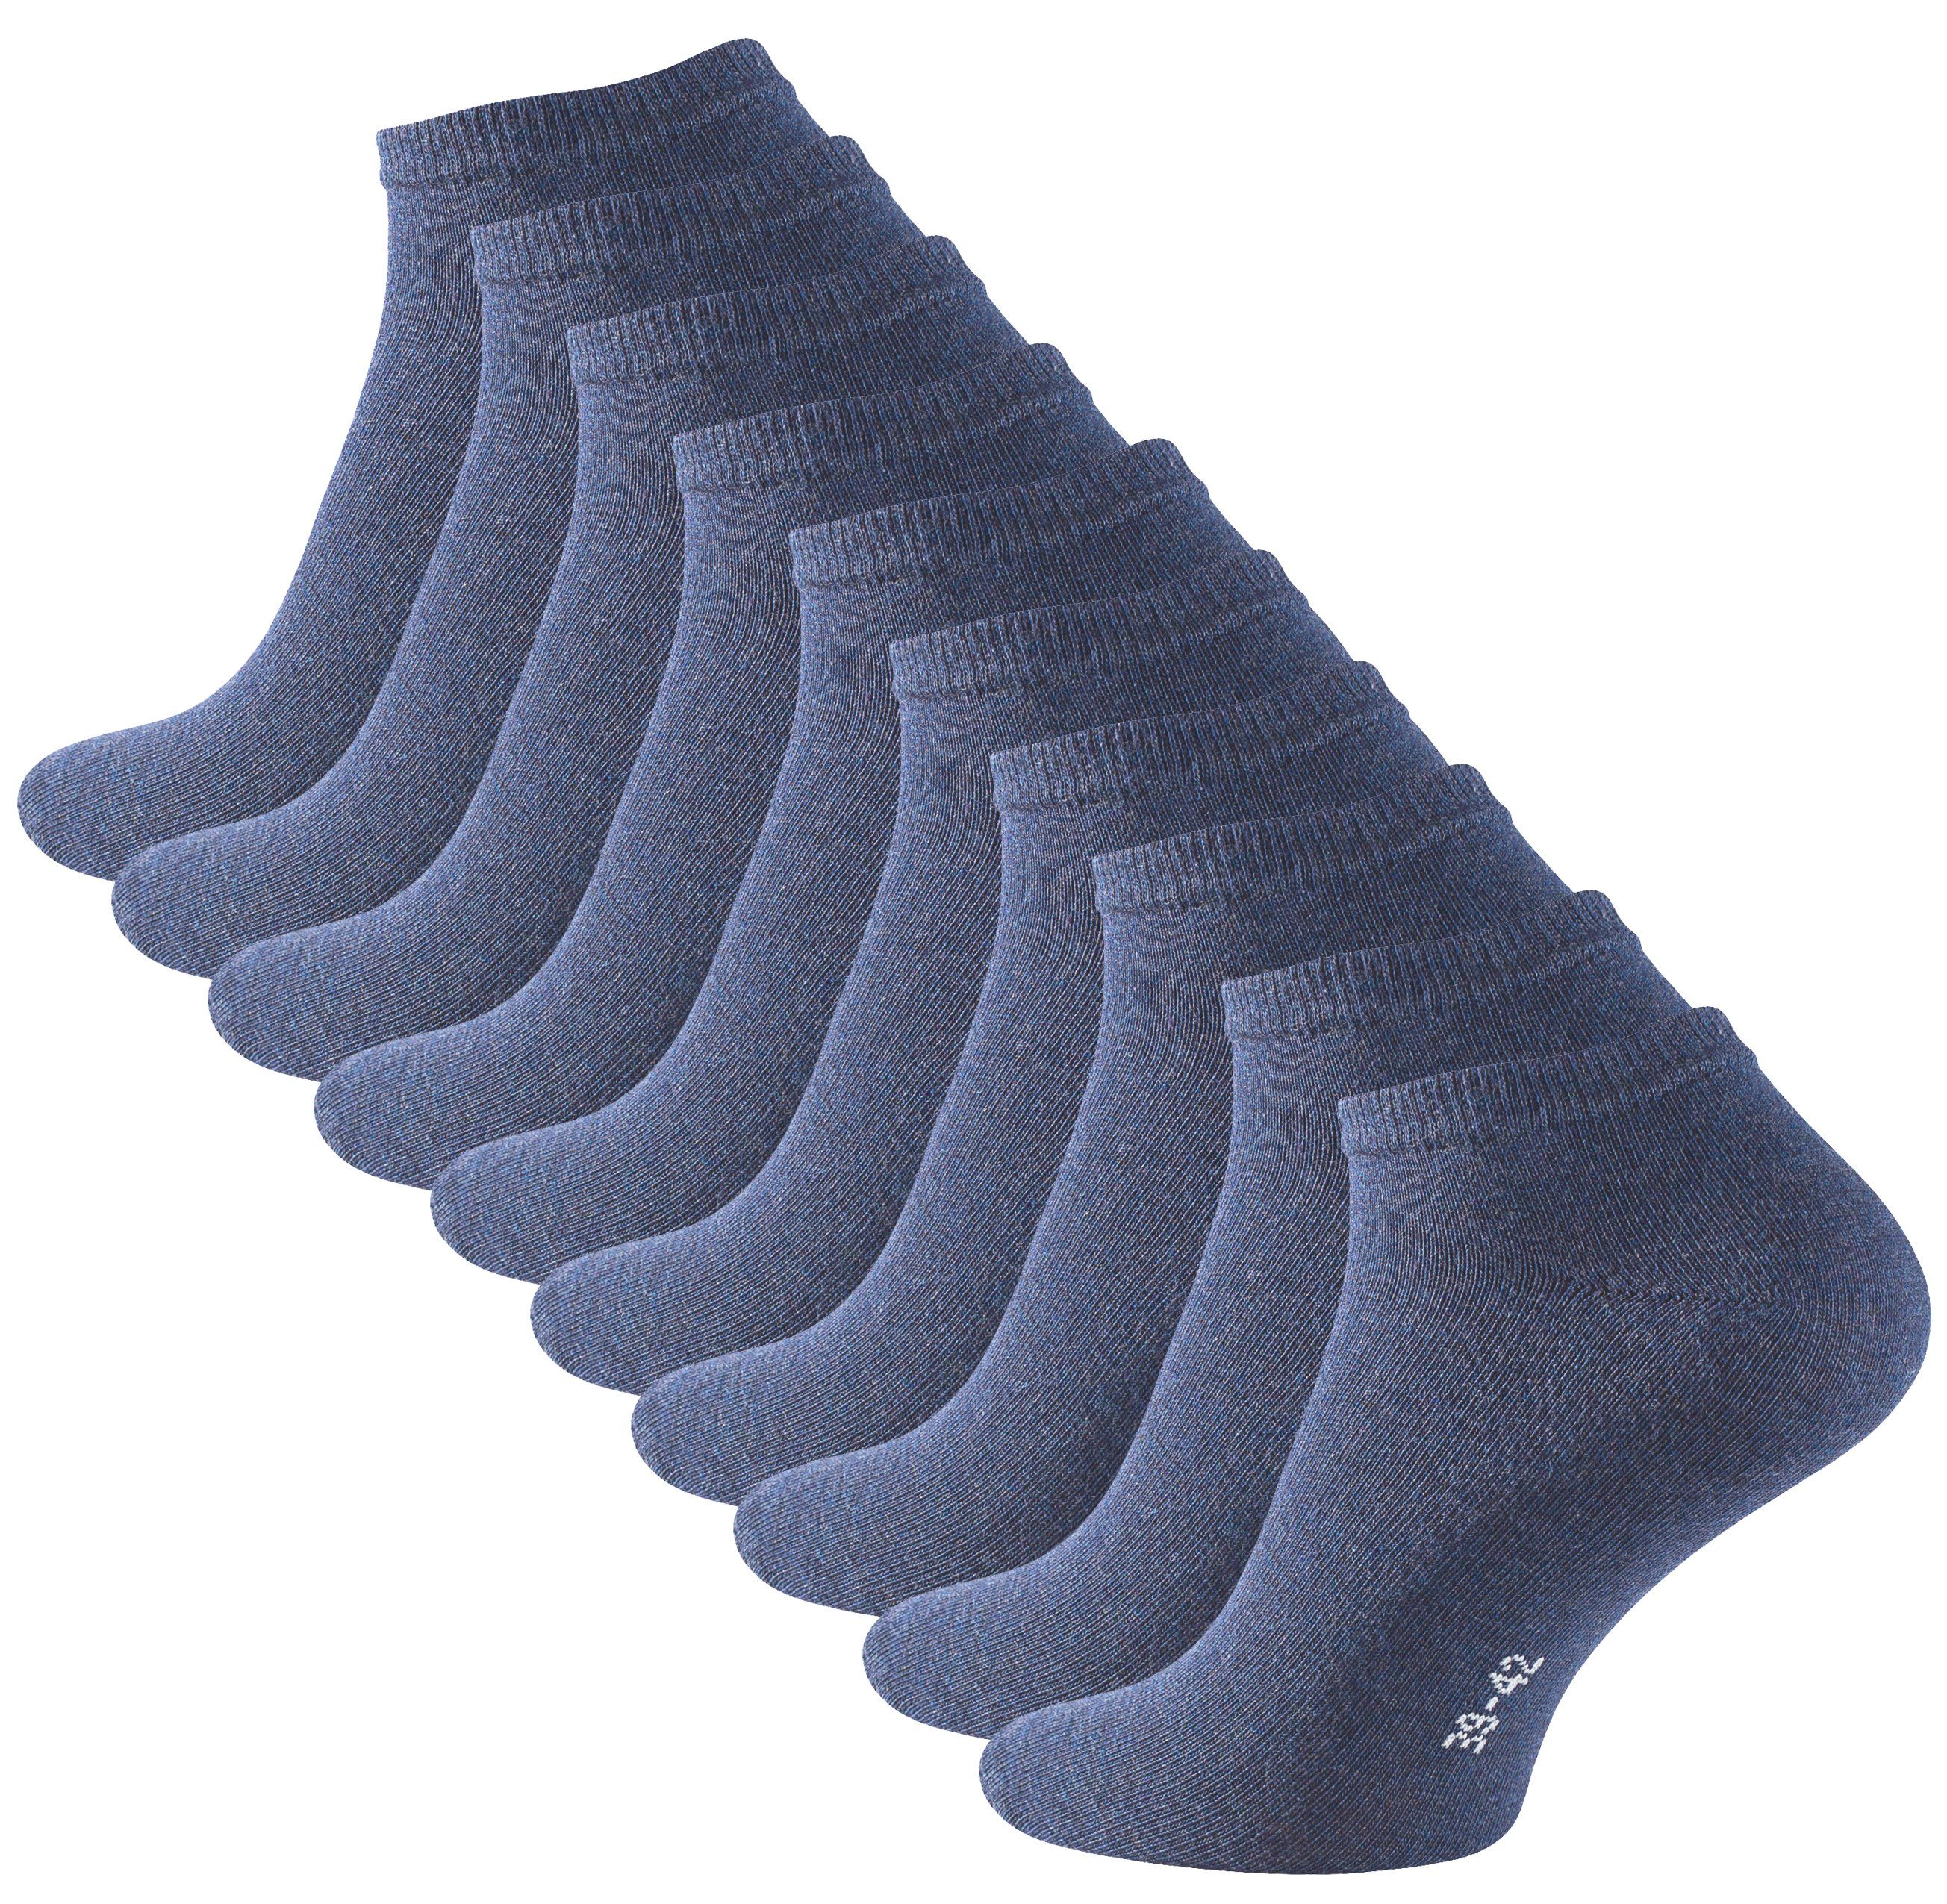 Cotton Prime® Sneakersocken (10-Paar) in angenehmer Baumwollqualität Jeansblau